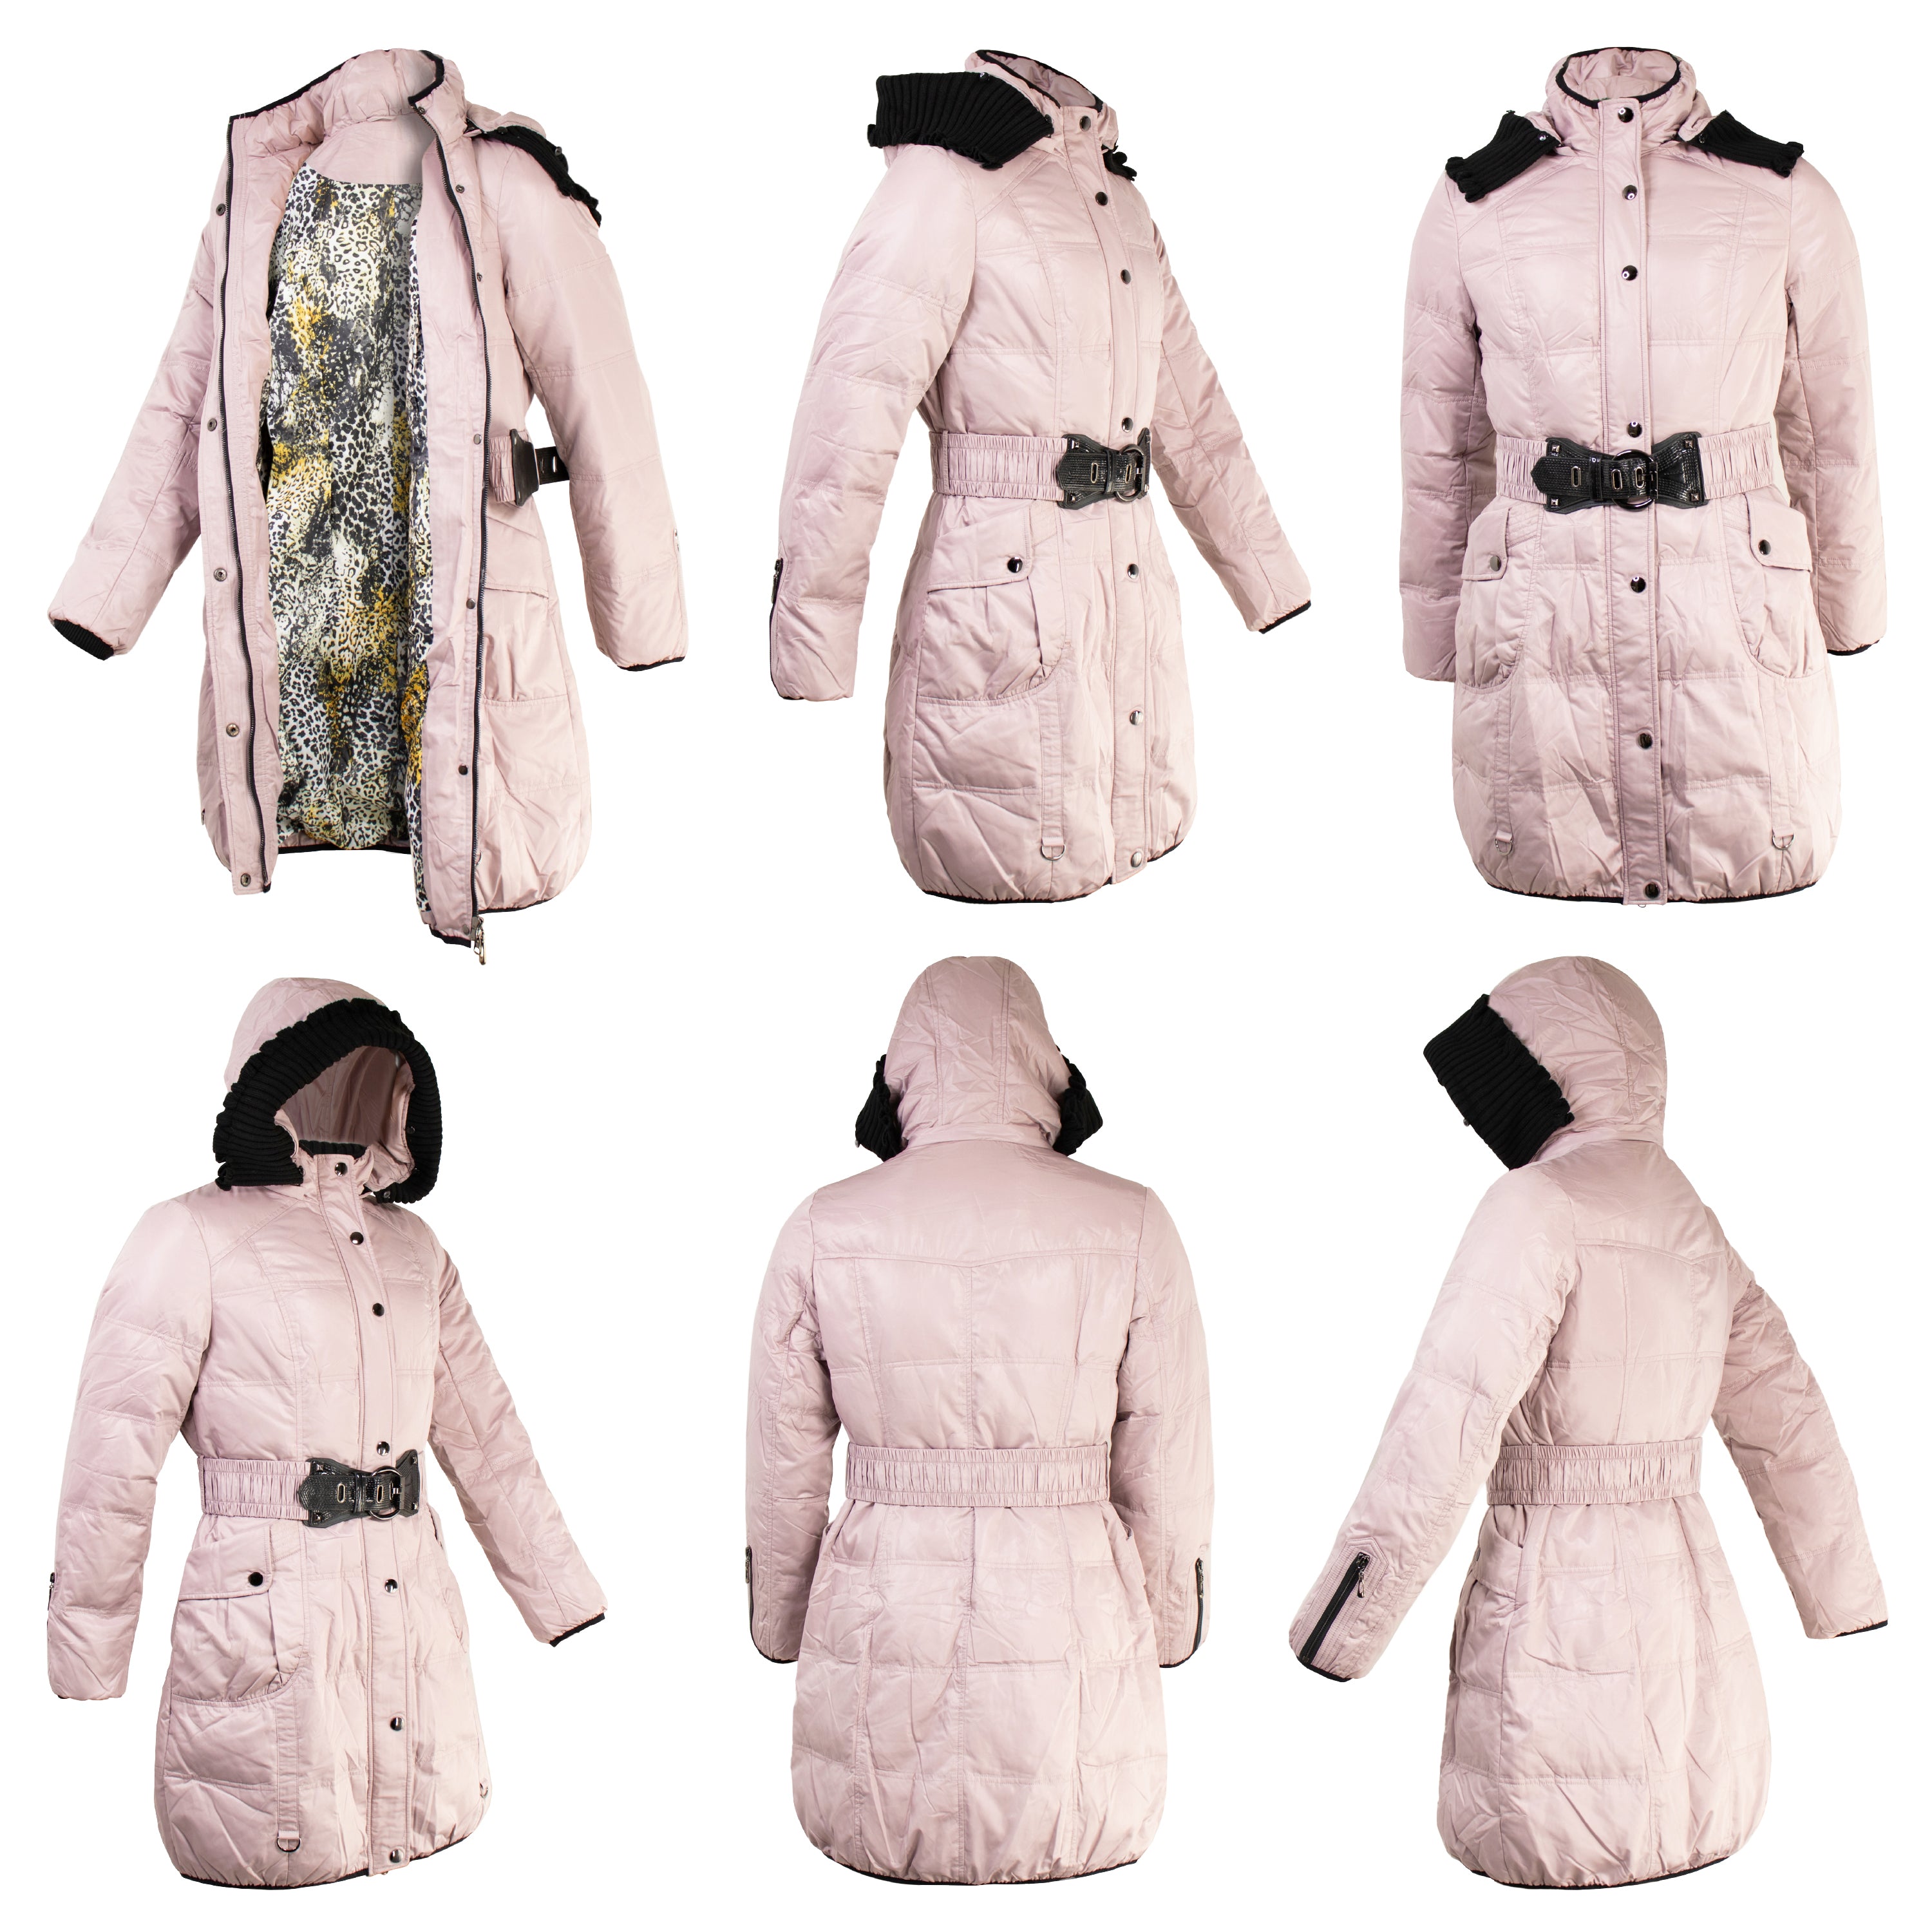 Women's Coats in Assorted Styles & Sizes - Bulk Case of 15 Jackets